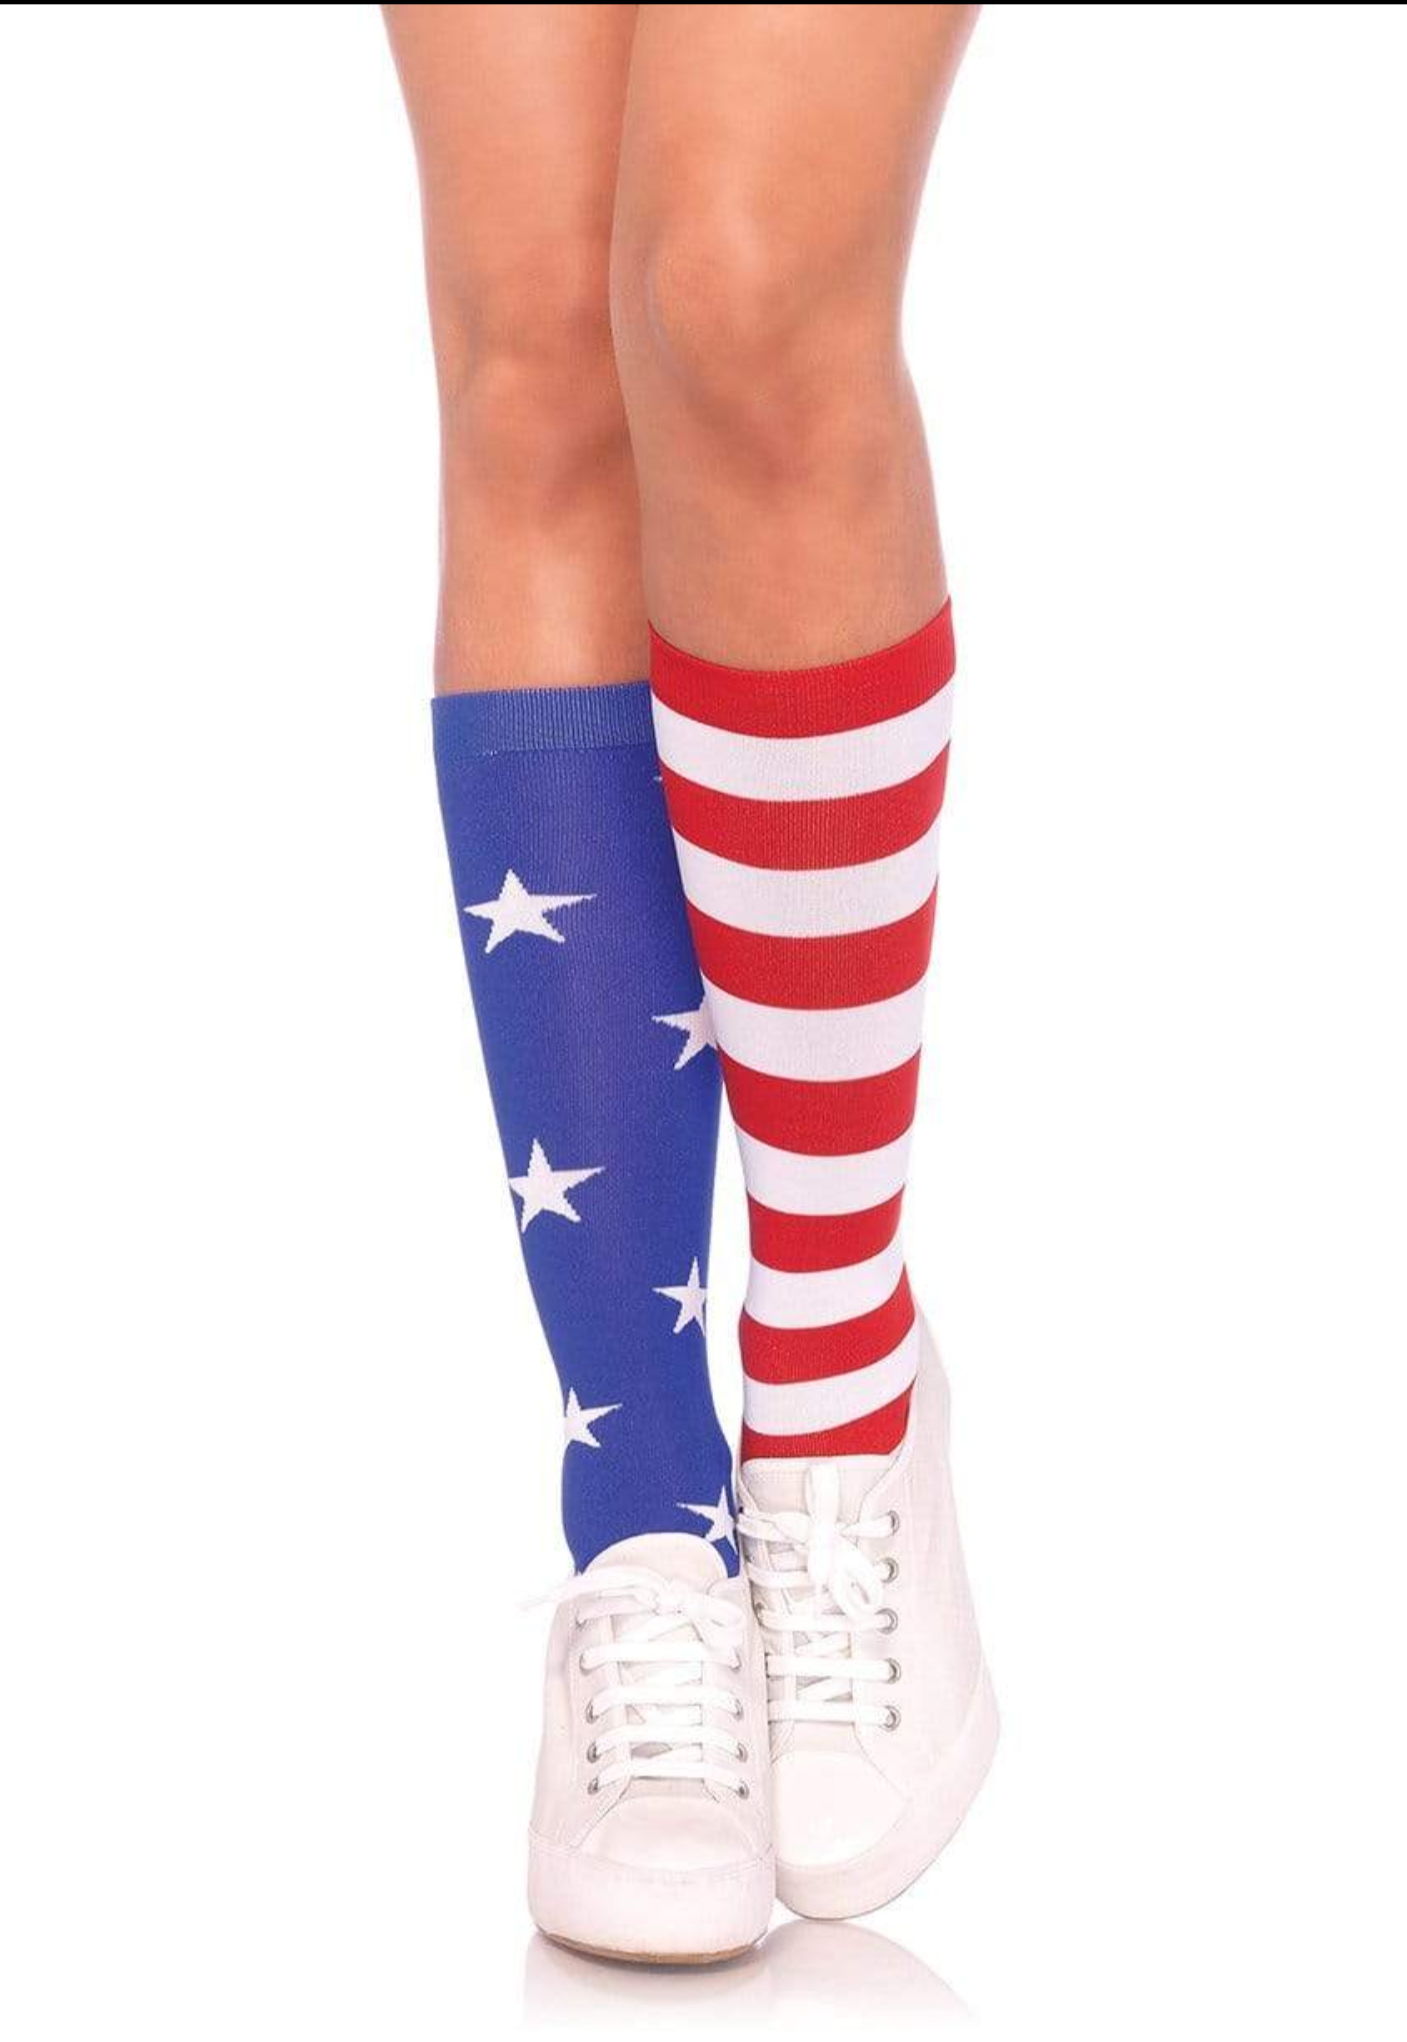 Stars and stripes knee high socks